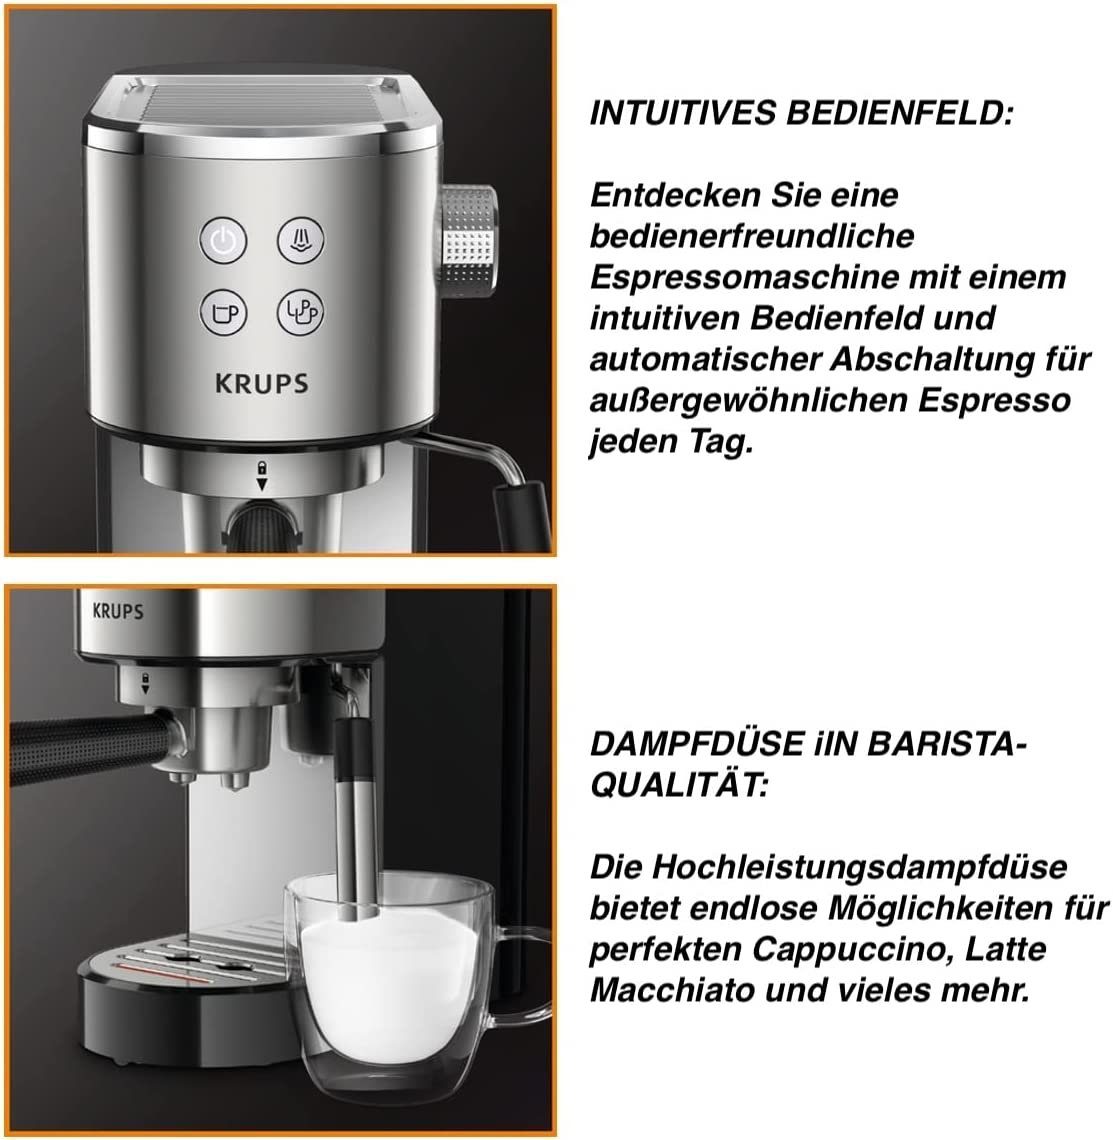 geeignet 15 1l Bar + Edelstahl, Kaffeepads Filtereinsatz automatischer XP442C, Kaffeekanne, ESE Tamper, Krups Espressomaschine Milchschaumdüse Abschaltung,